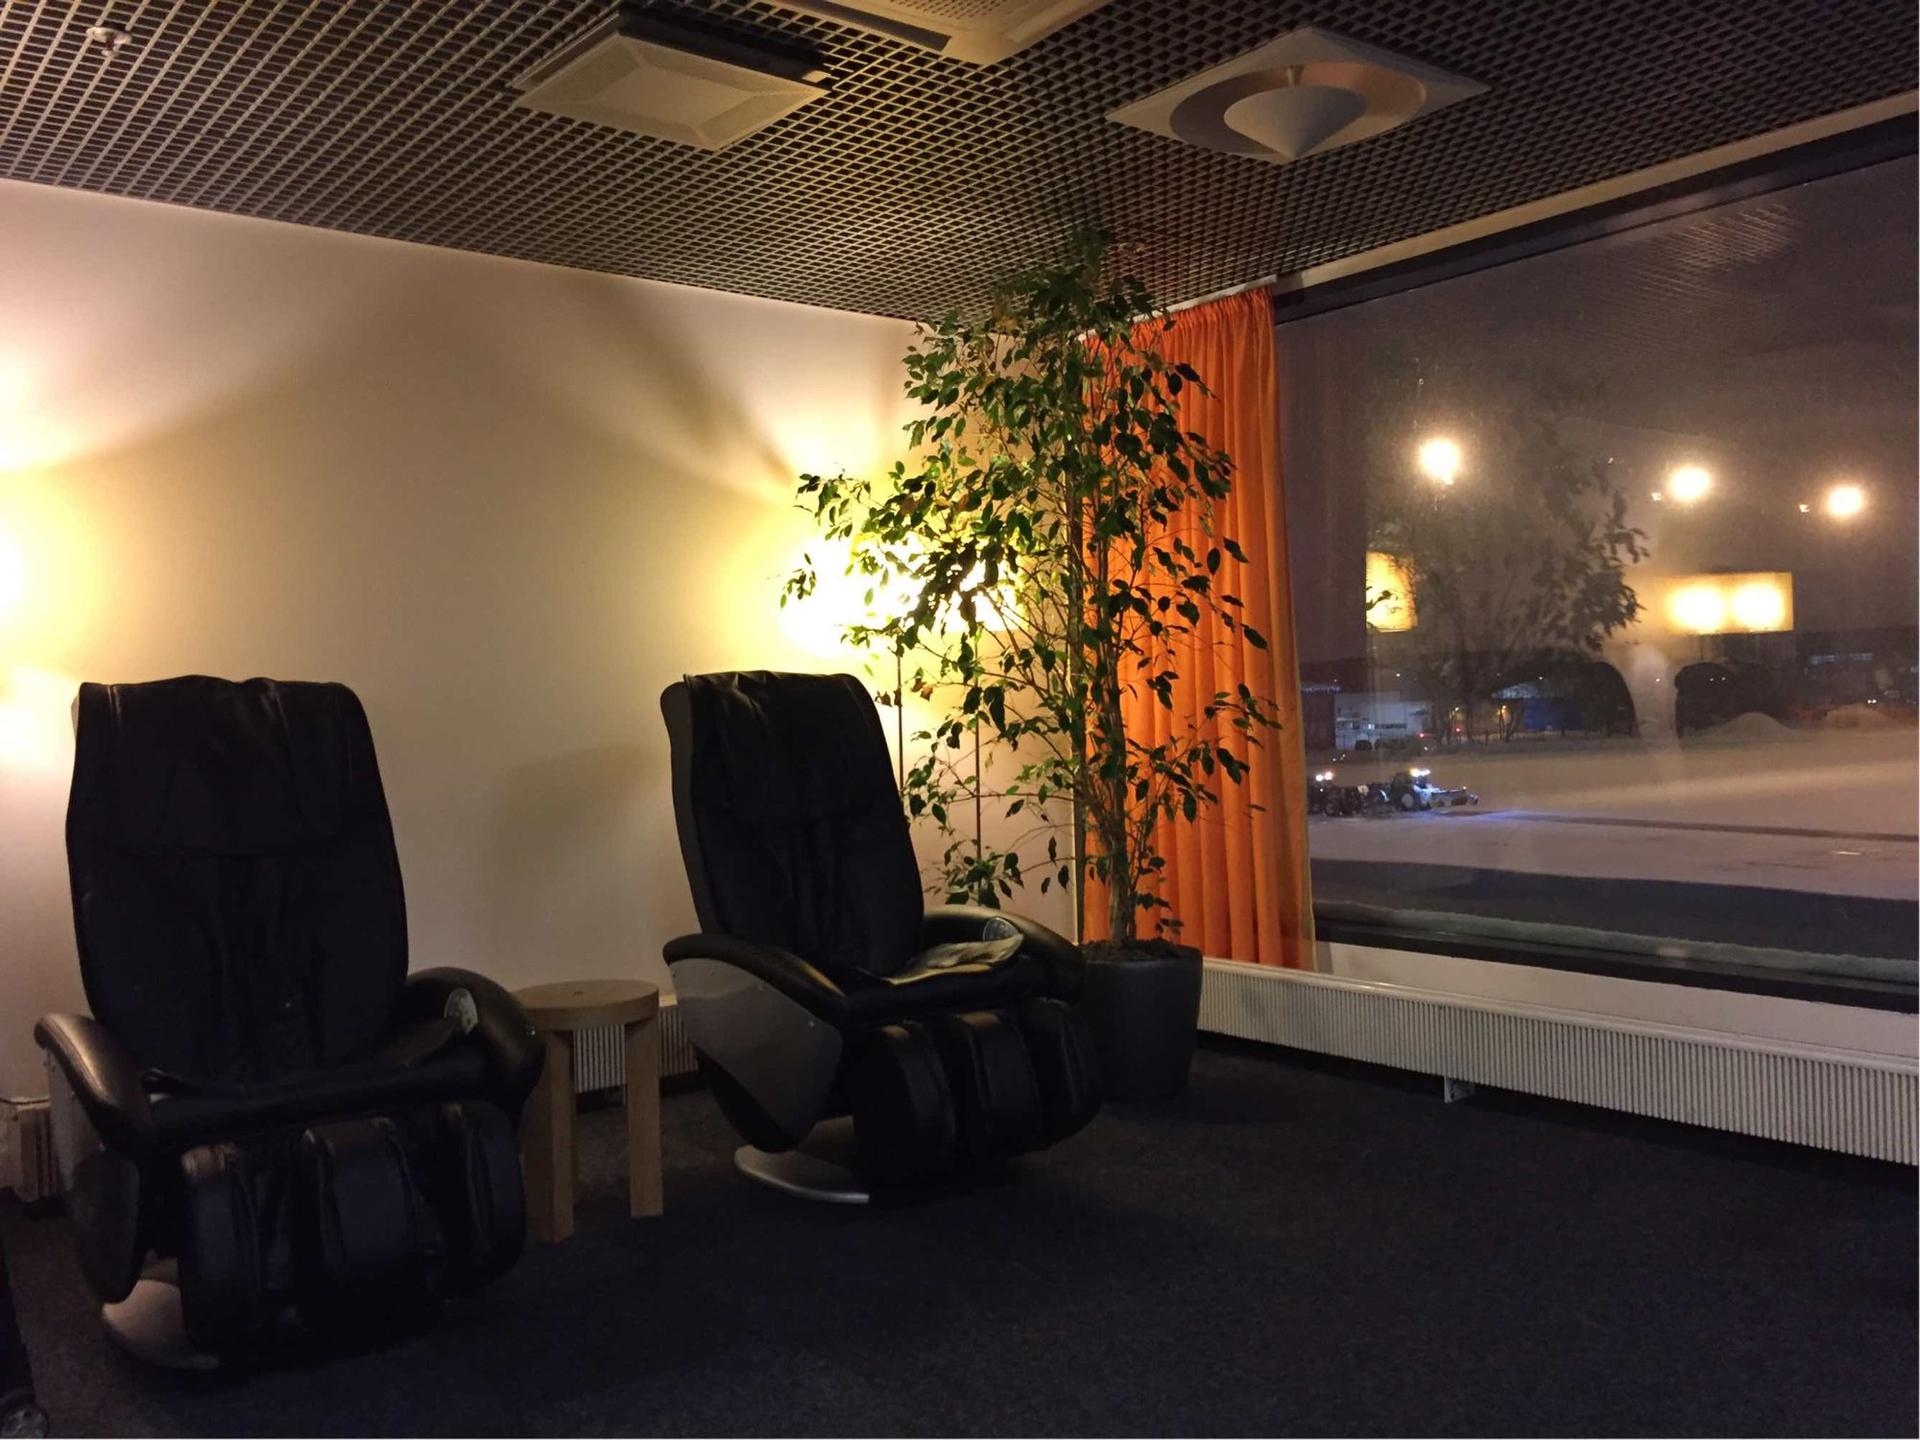 Tallinn Airport LHV Lounge image 17 of 20